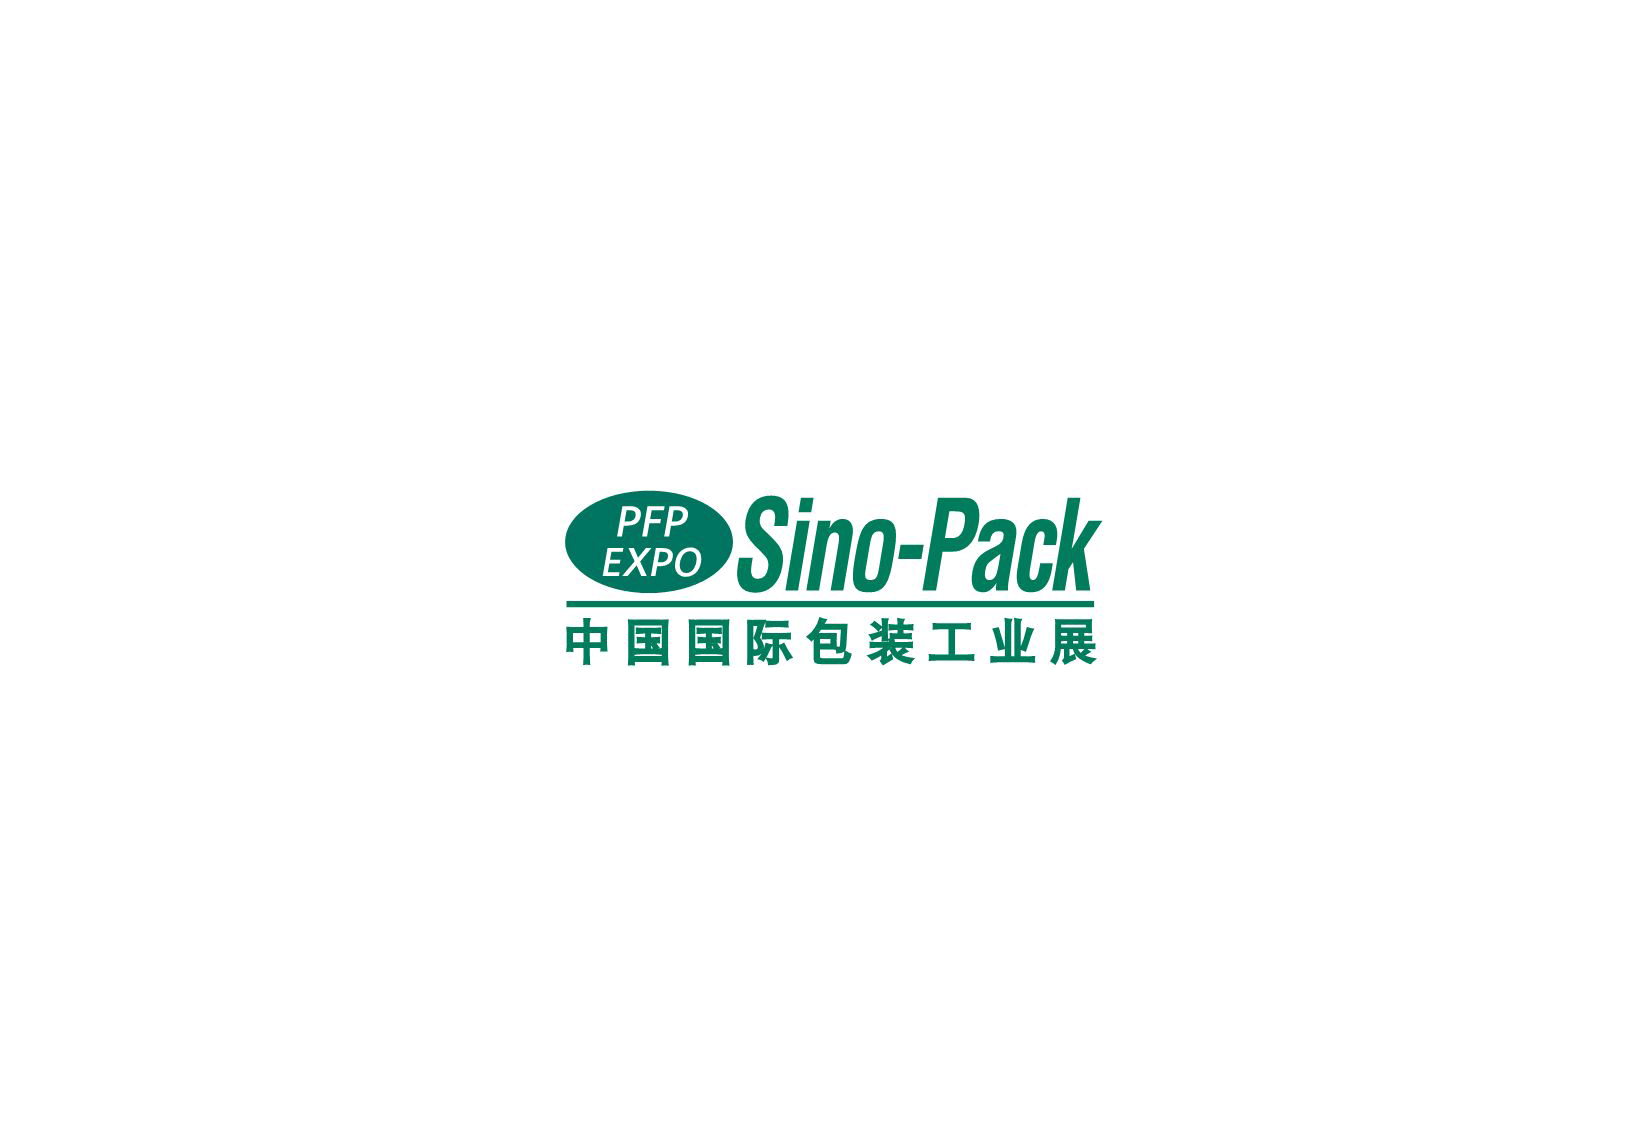 Sino Pack 4 Mar -6 Mar, 2013